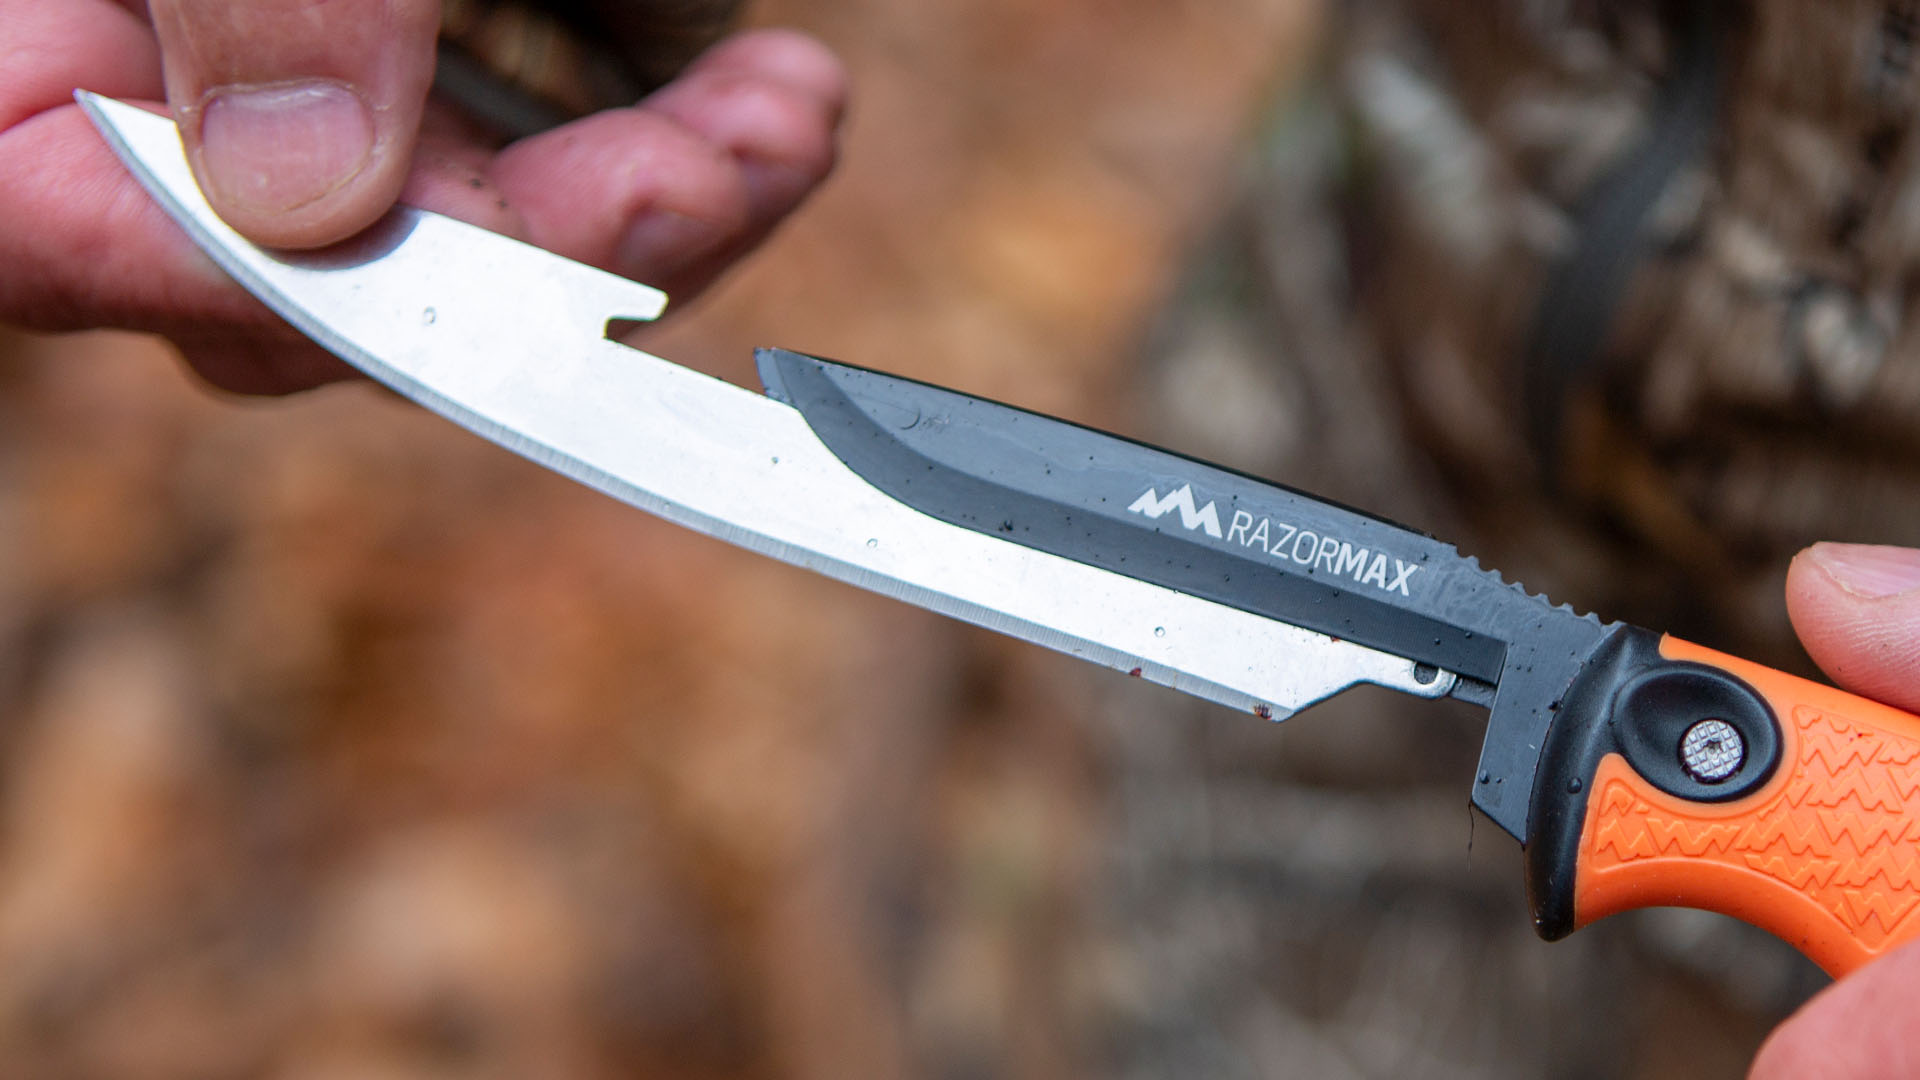 Hunting Deer Knife Set Field Dressing Kit Portable Butcher Game Proces -  Knine Outdoors